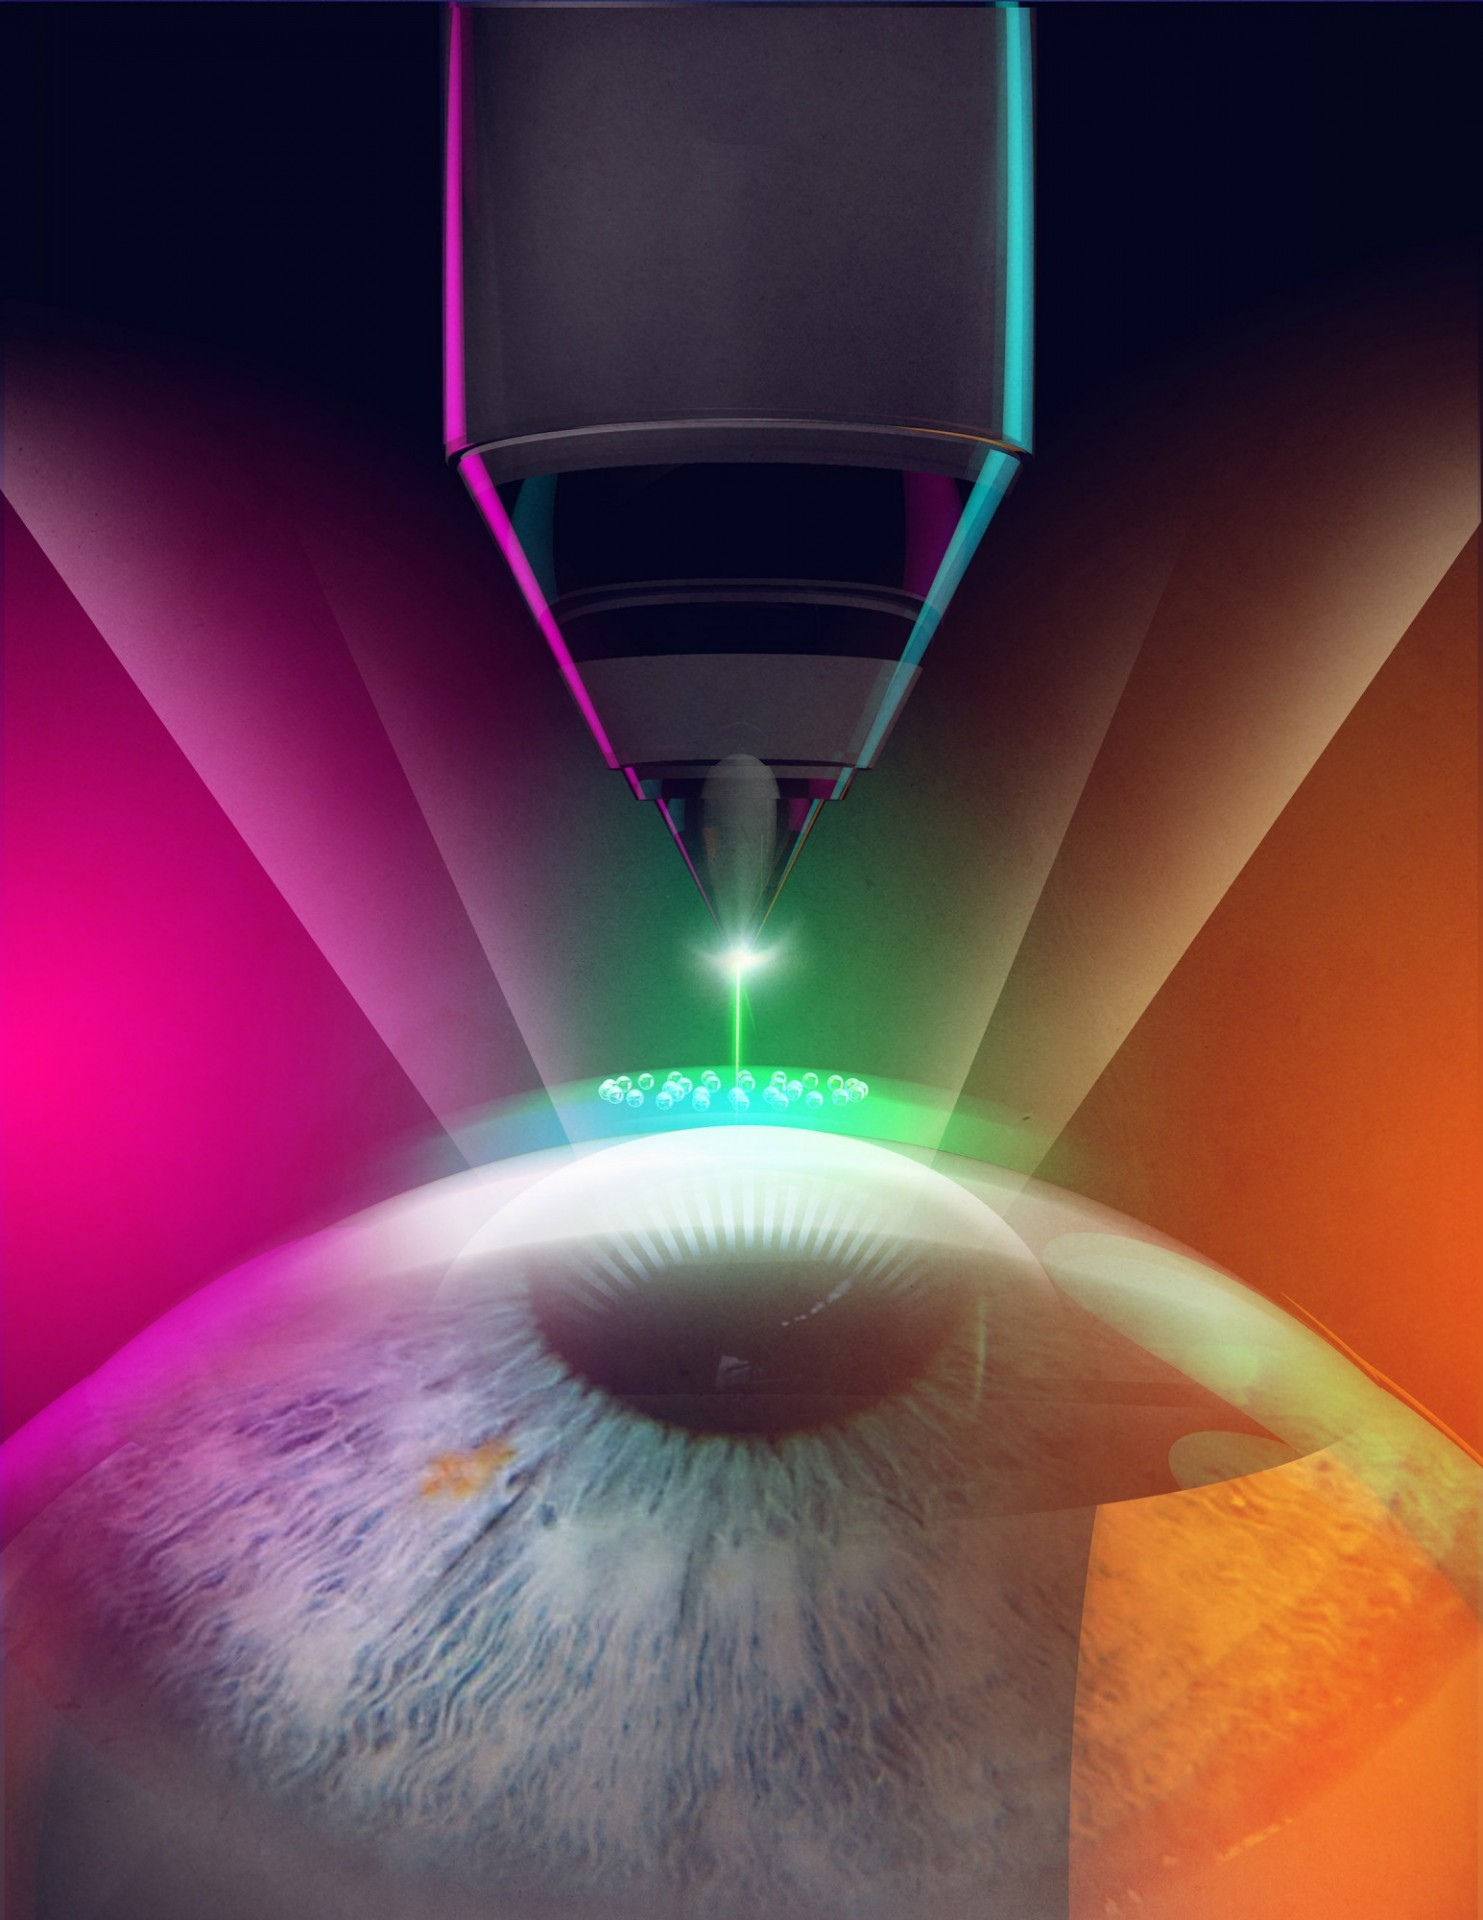 femtosecond laser treatment of the eye